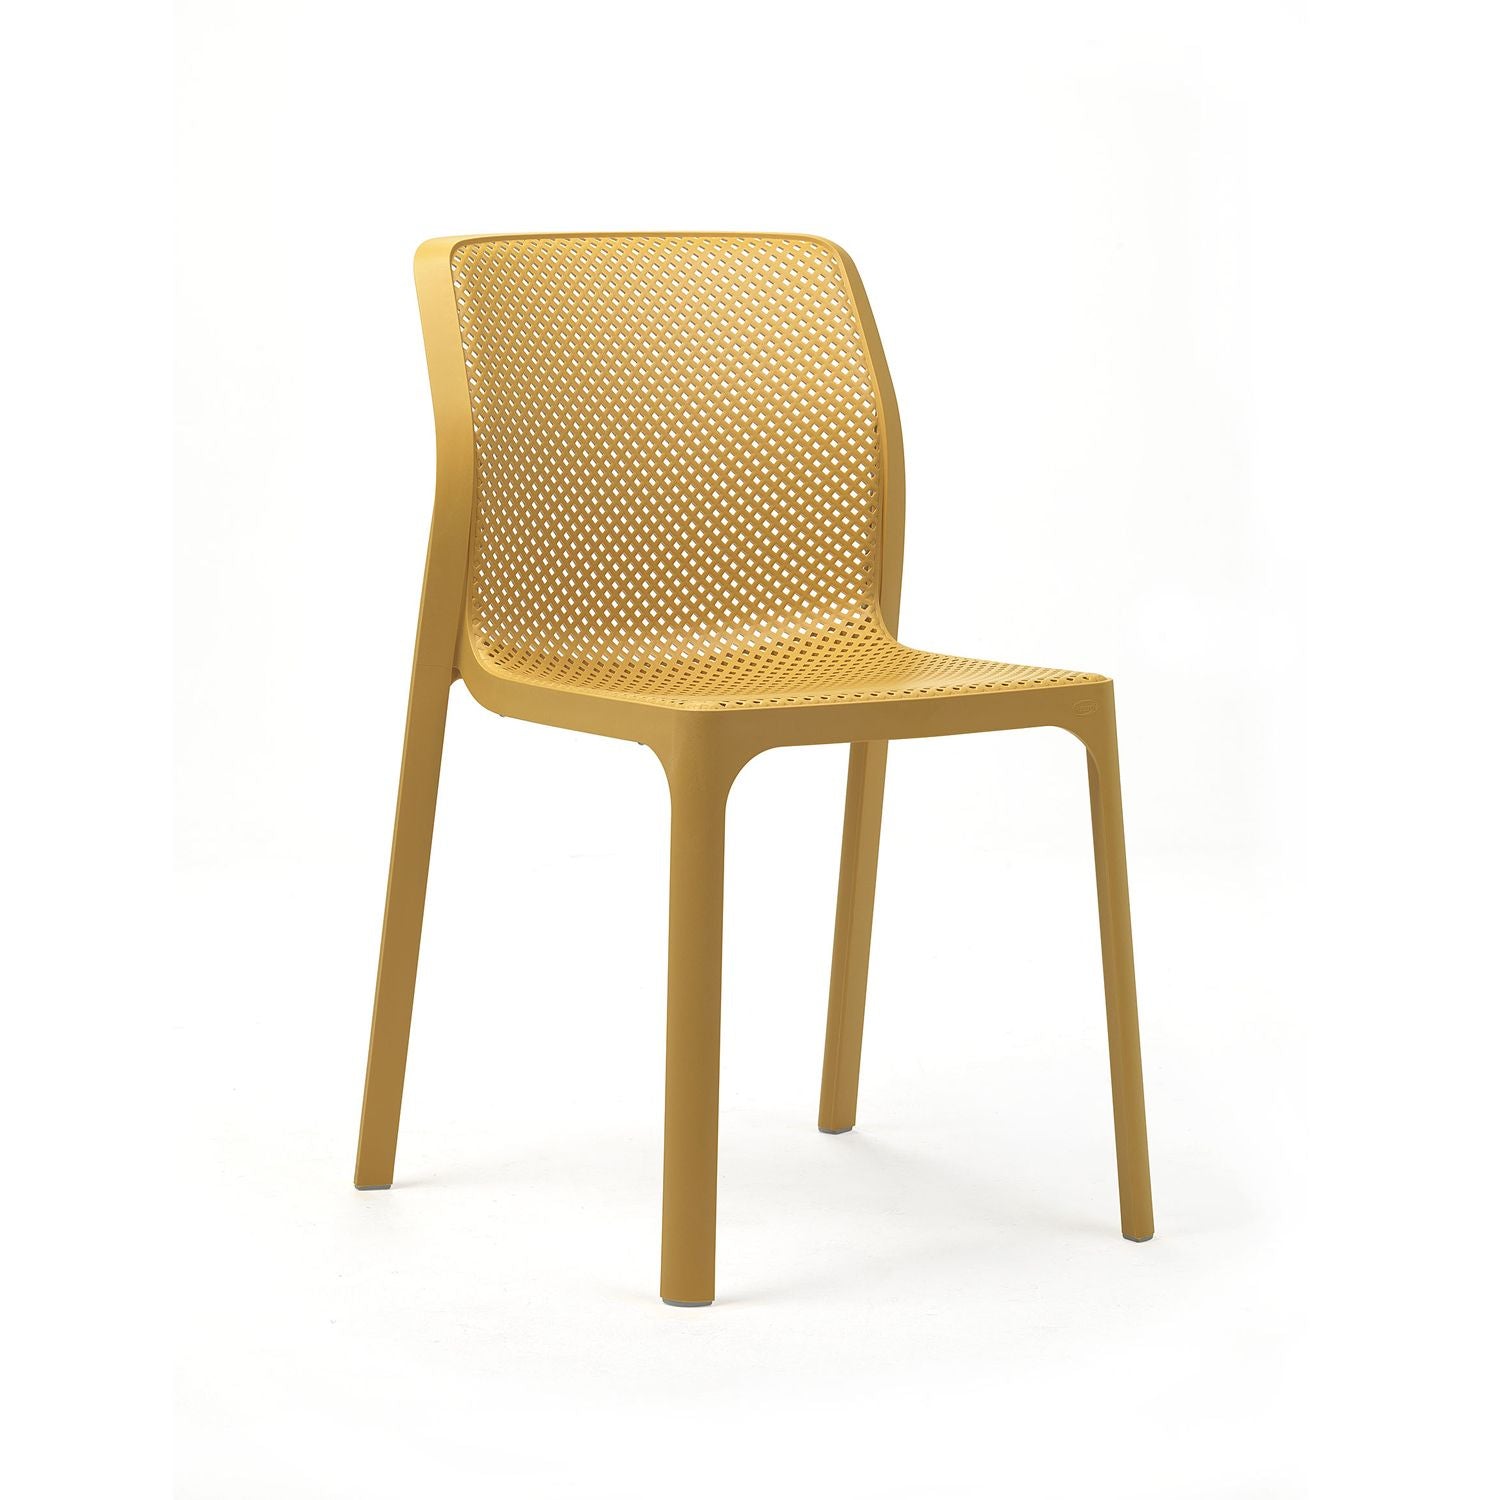 Bit Chair By Nardi - Mustard